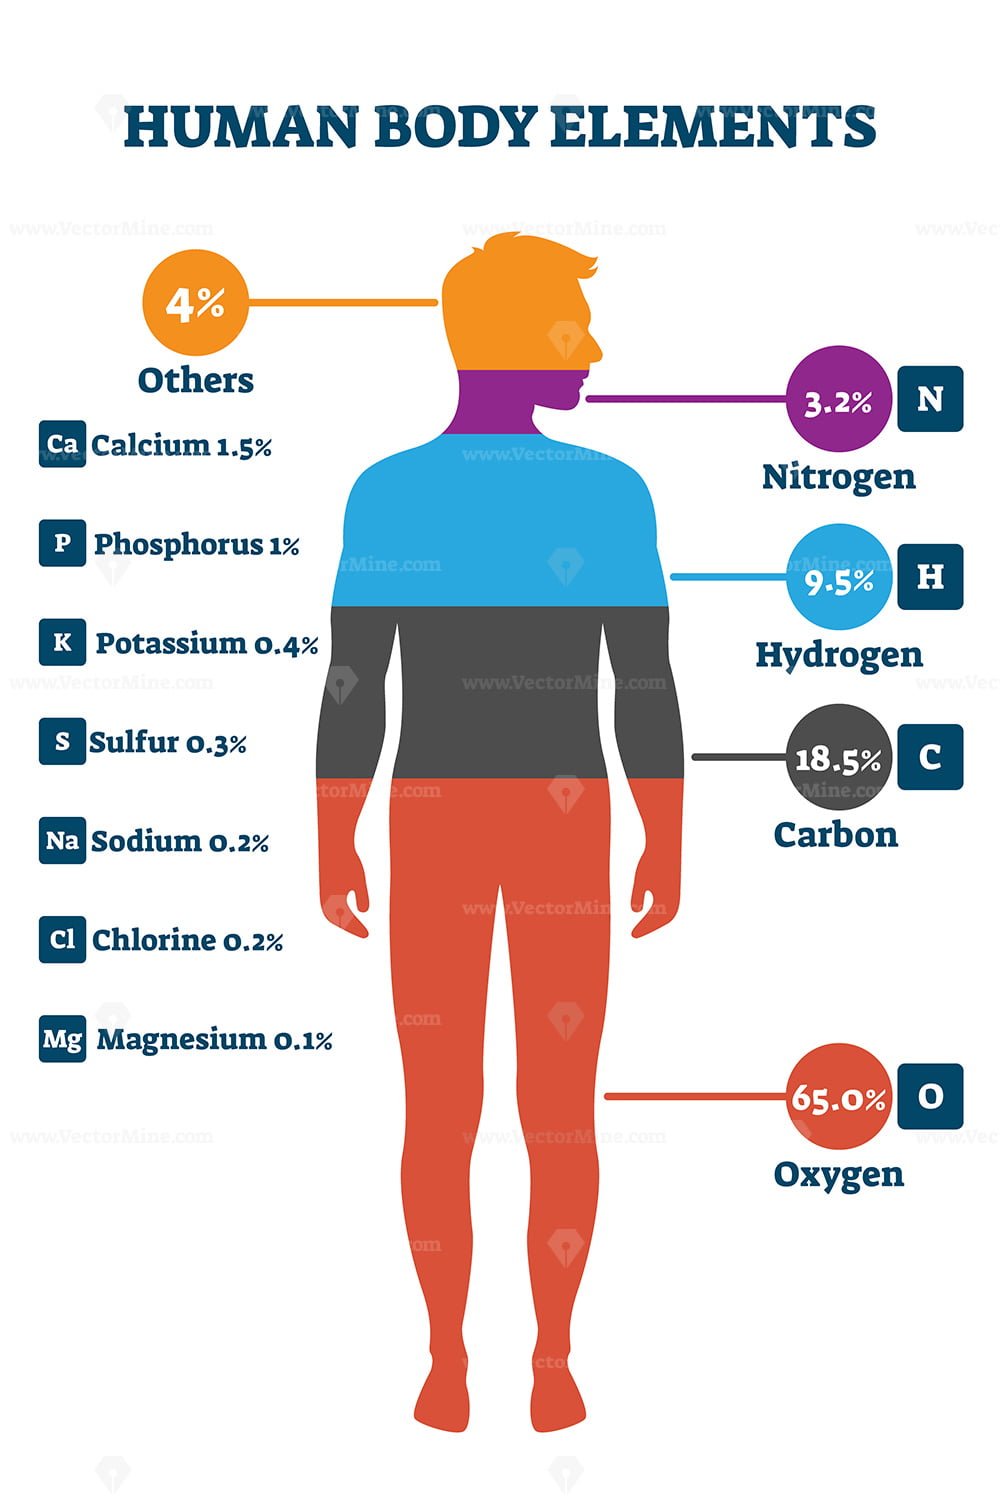 Human Body Elements 